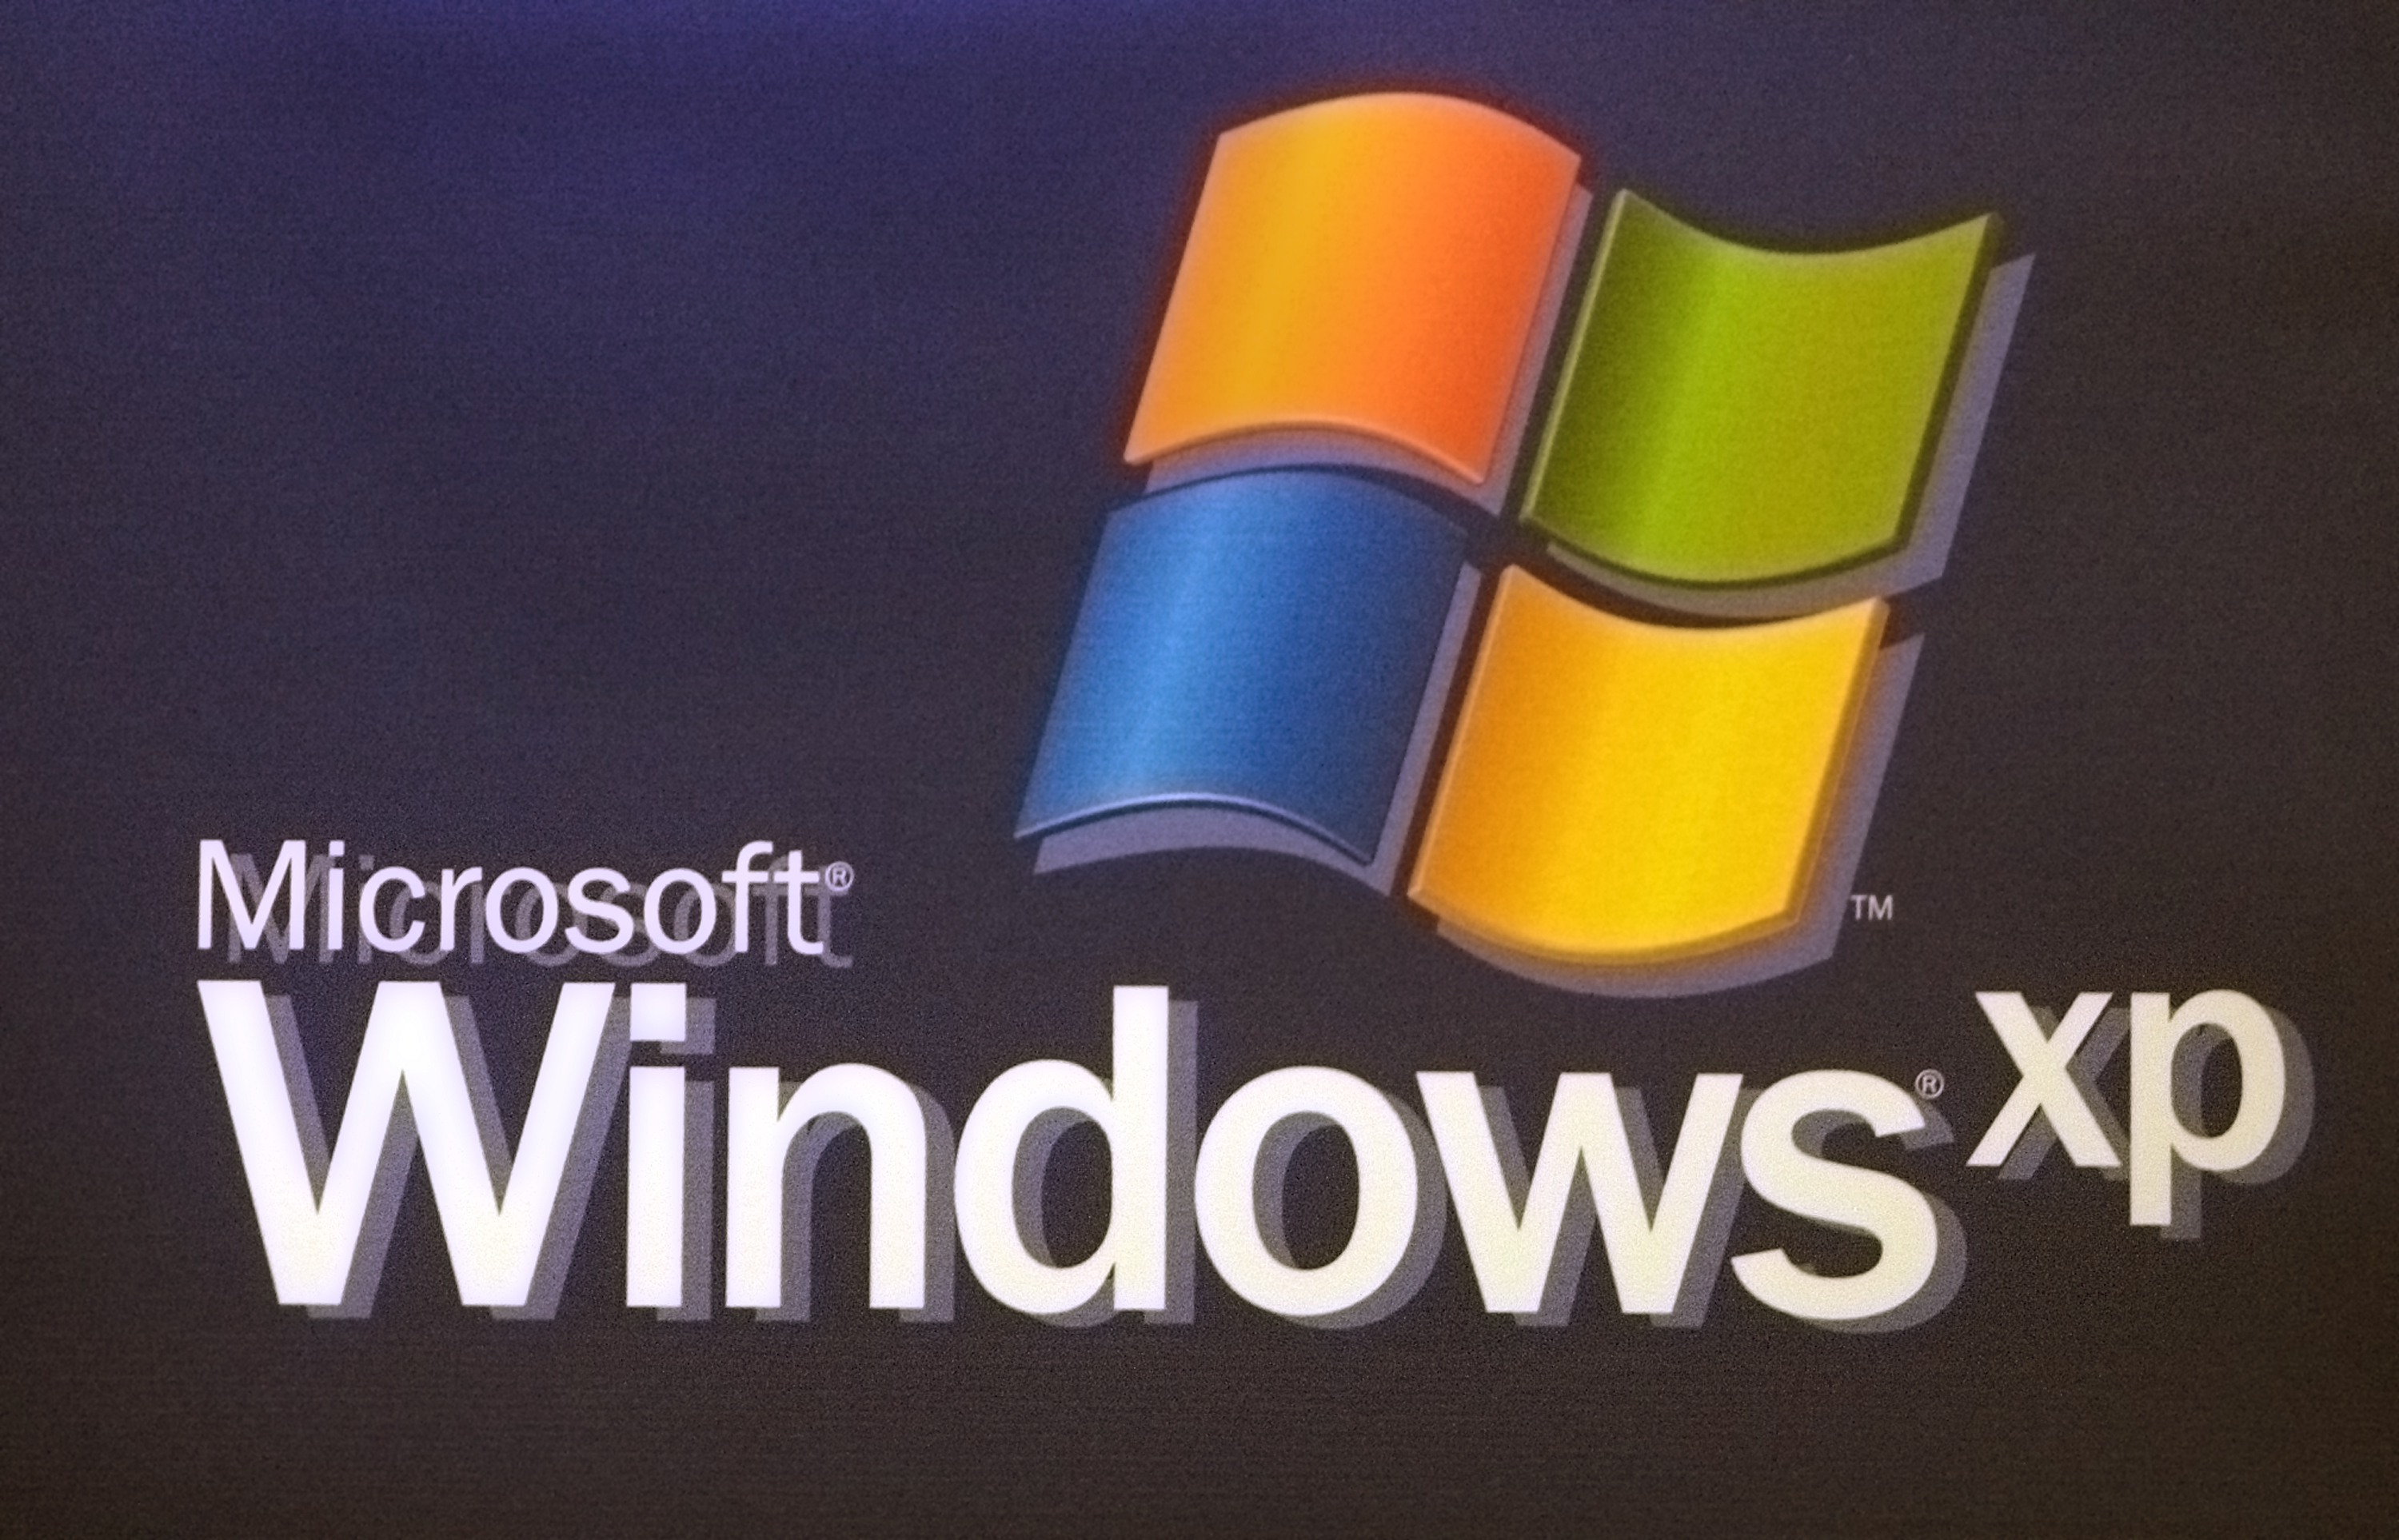 Microsoft windows operating system exe. Виндовс XP. Логотип Microsoft Windows XP. Операционная система виндовс. Операционная система Windows XP.